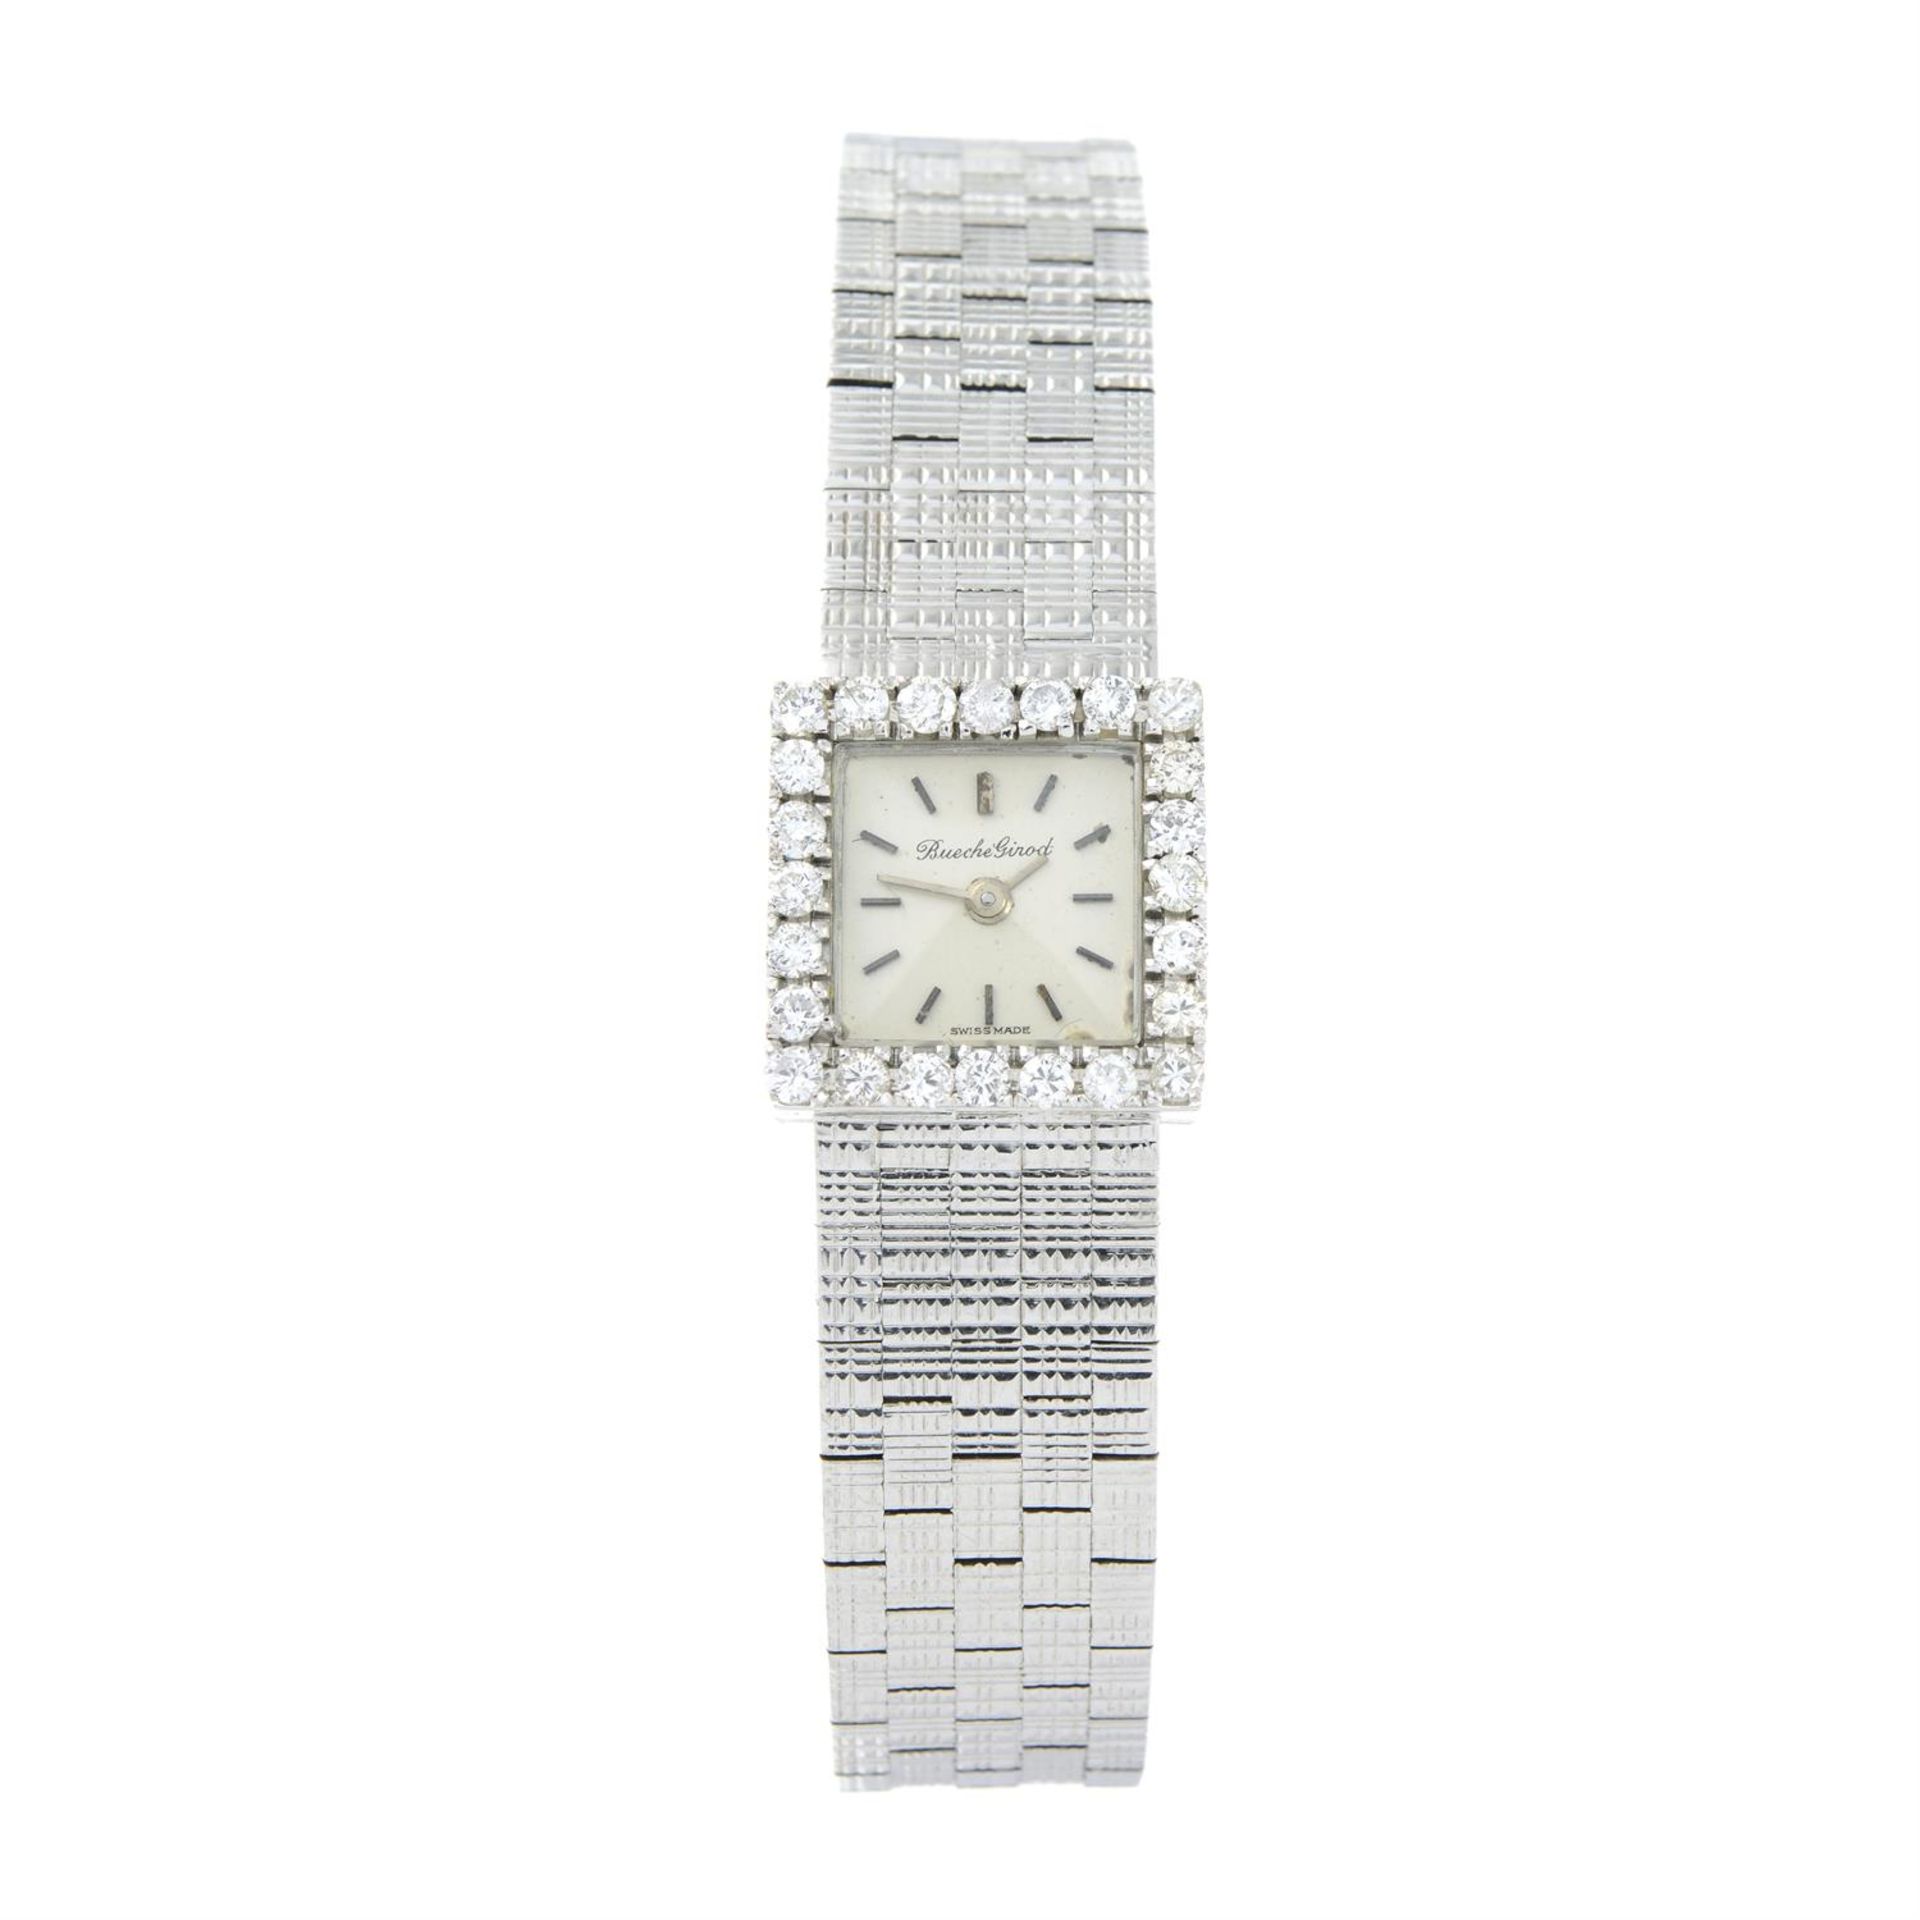 Mid 20th century textured 18ct gold wrist watch, with brilliant-cut diamond bezel,